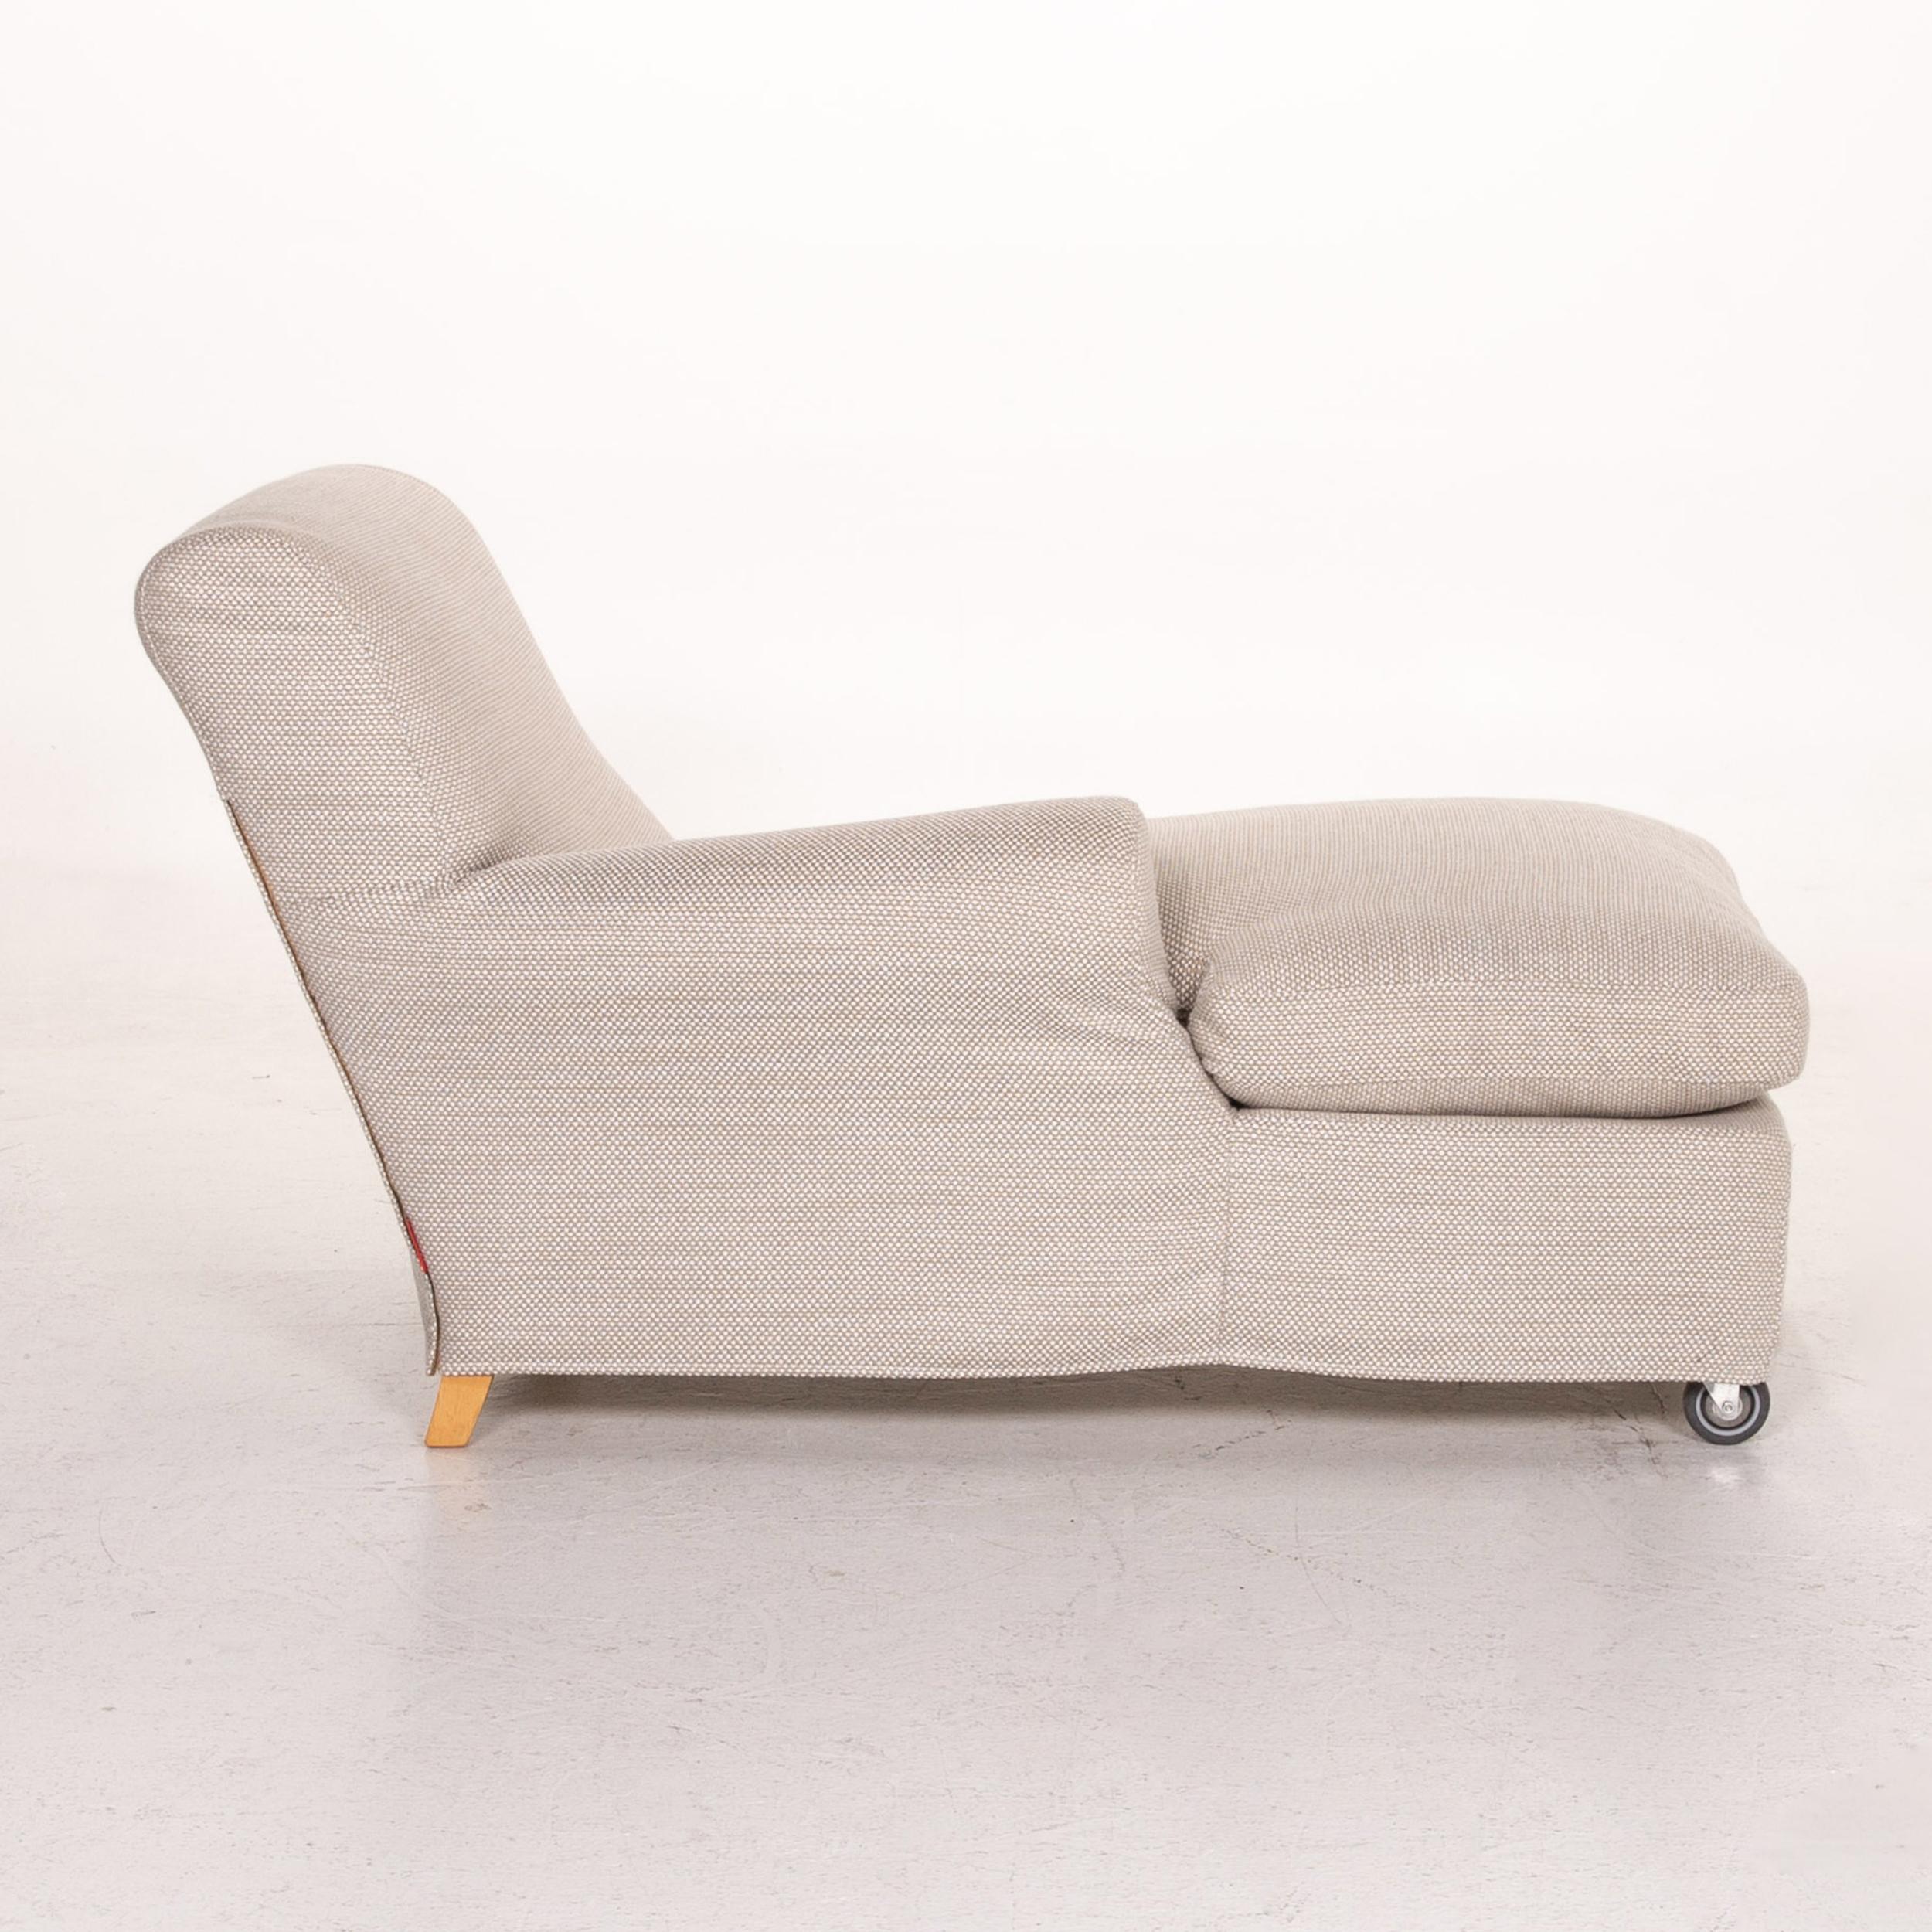 Contemporary Flexform Nonnamaria Fabric Lounger Beige Gray Beige Chaise Longue Dormeuse